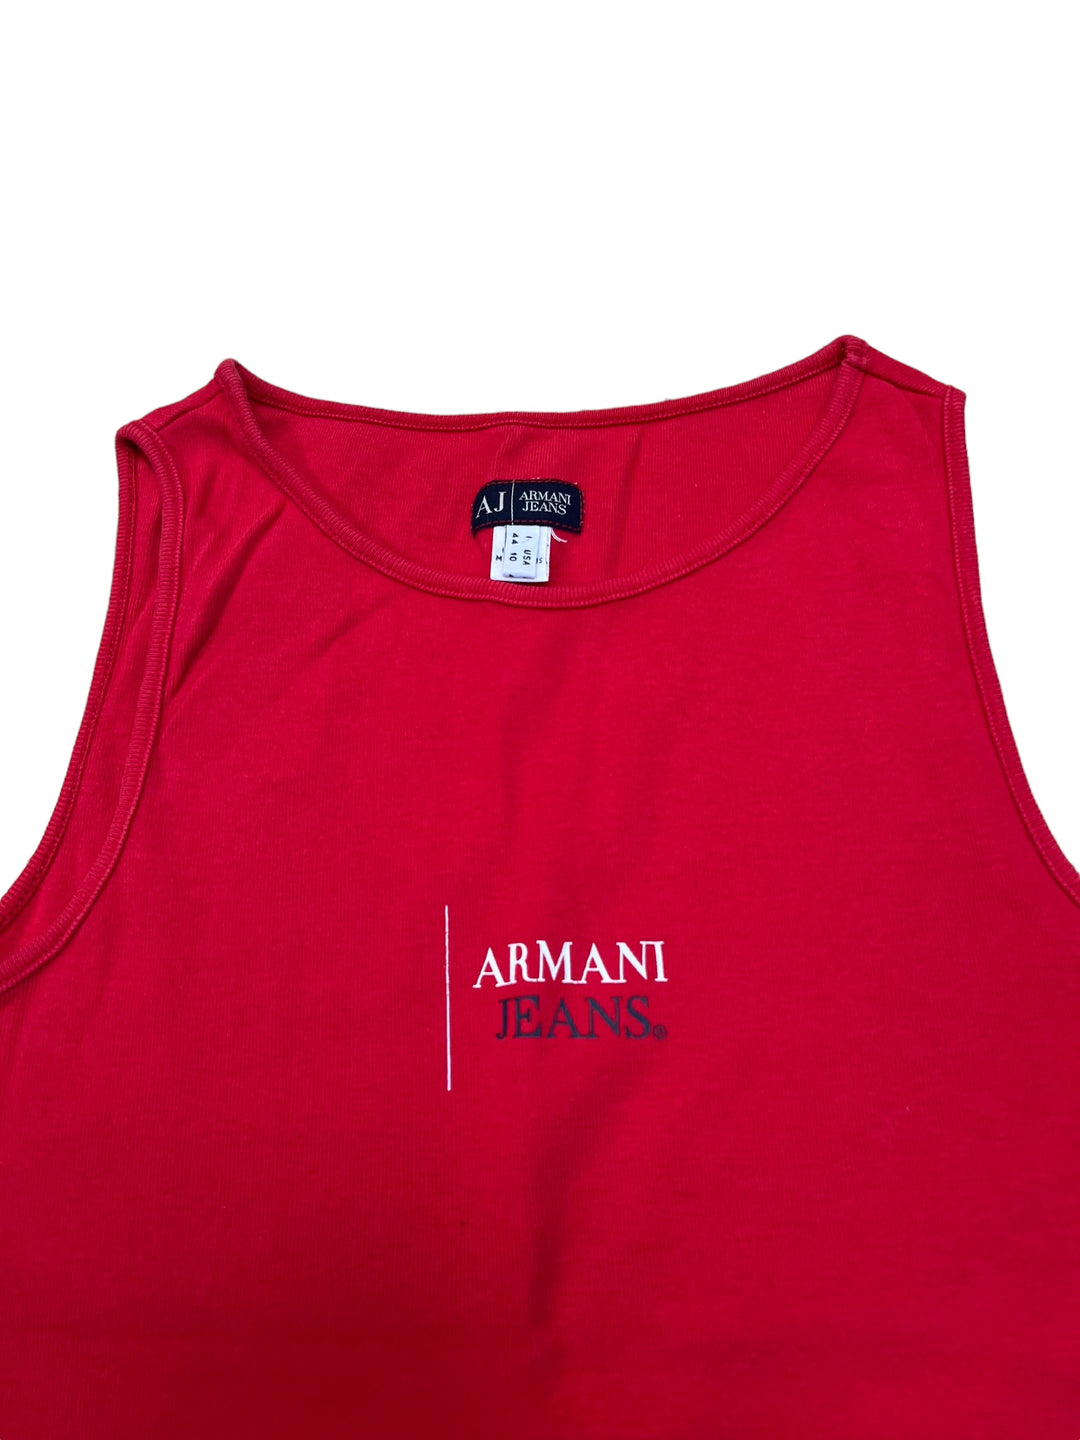 Armani Jeans y2k tank top women’s medium